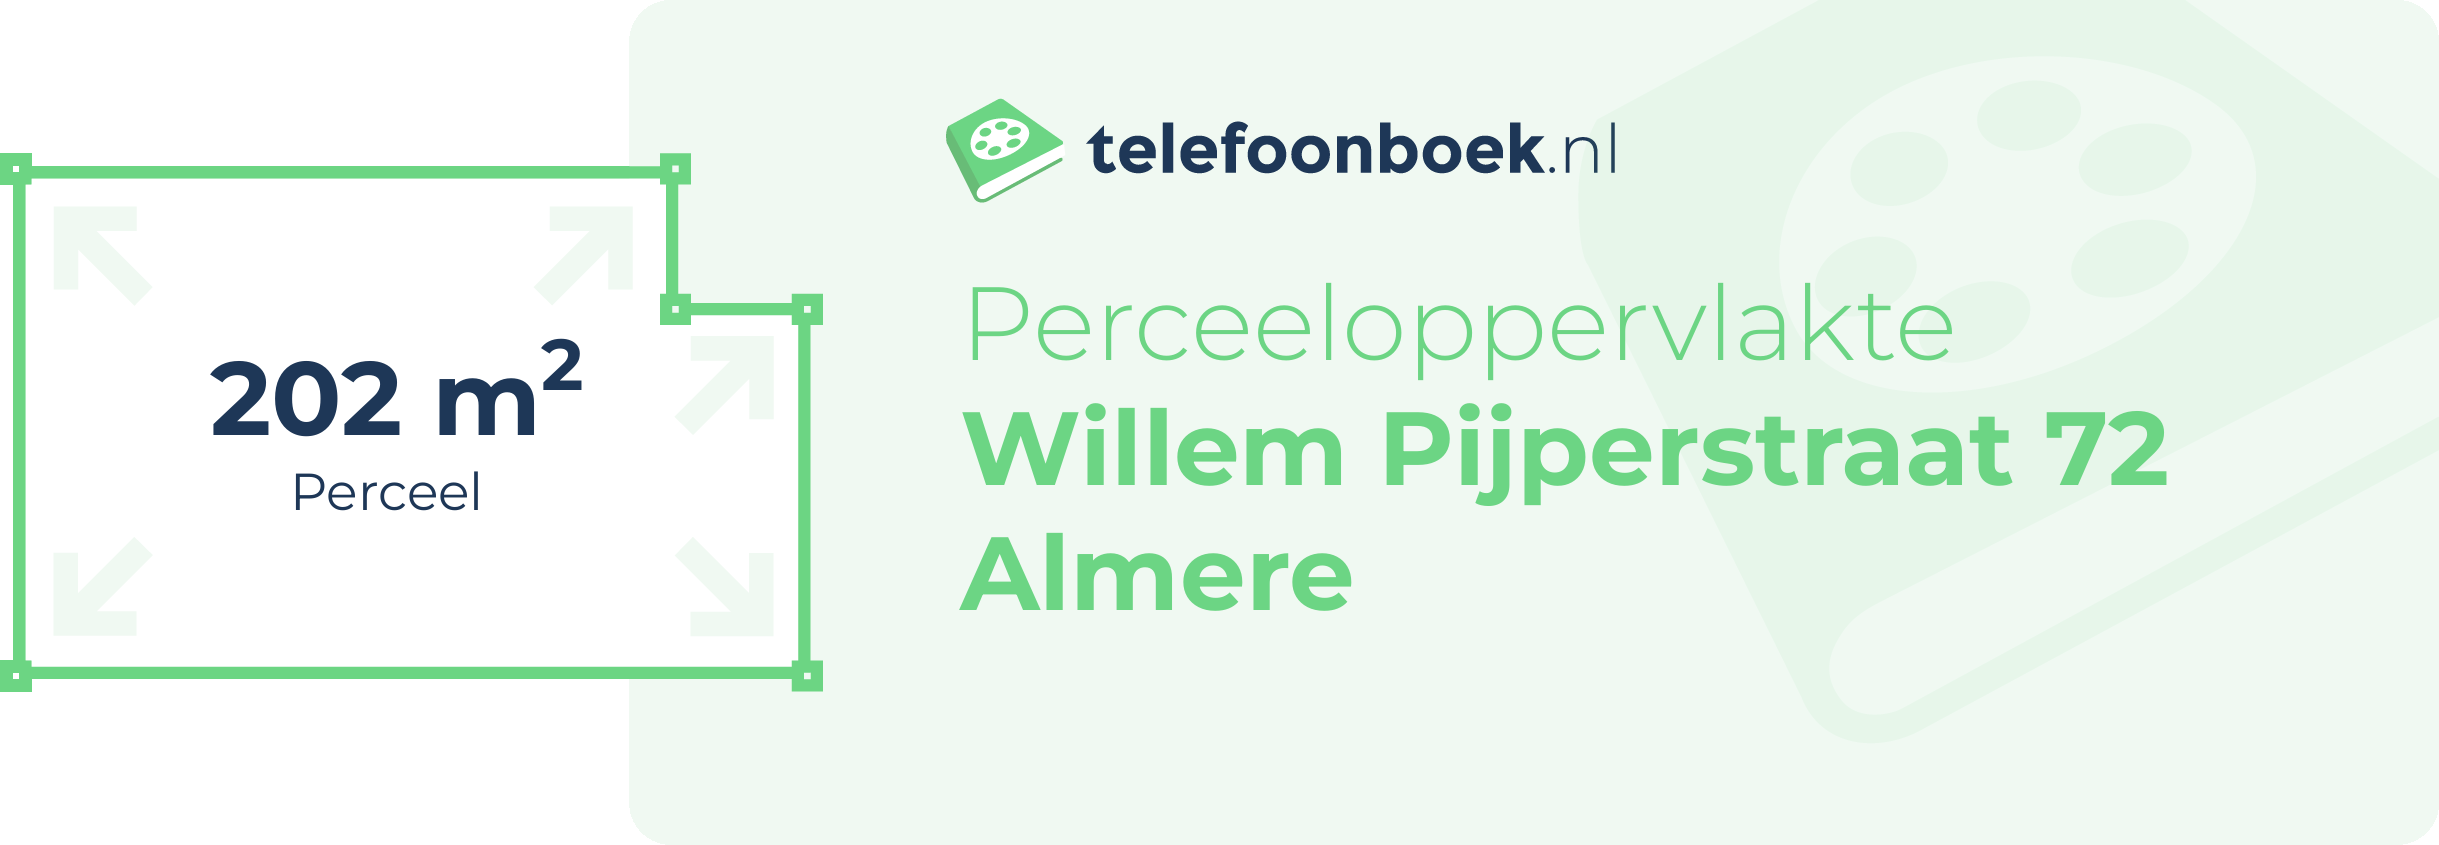 Perceeloppervlakte Willem Pijperstraat 72 Almere